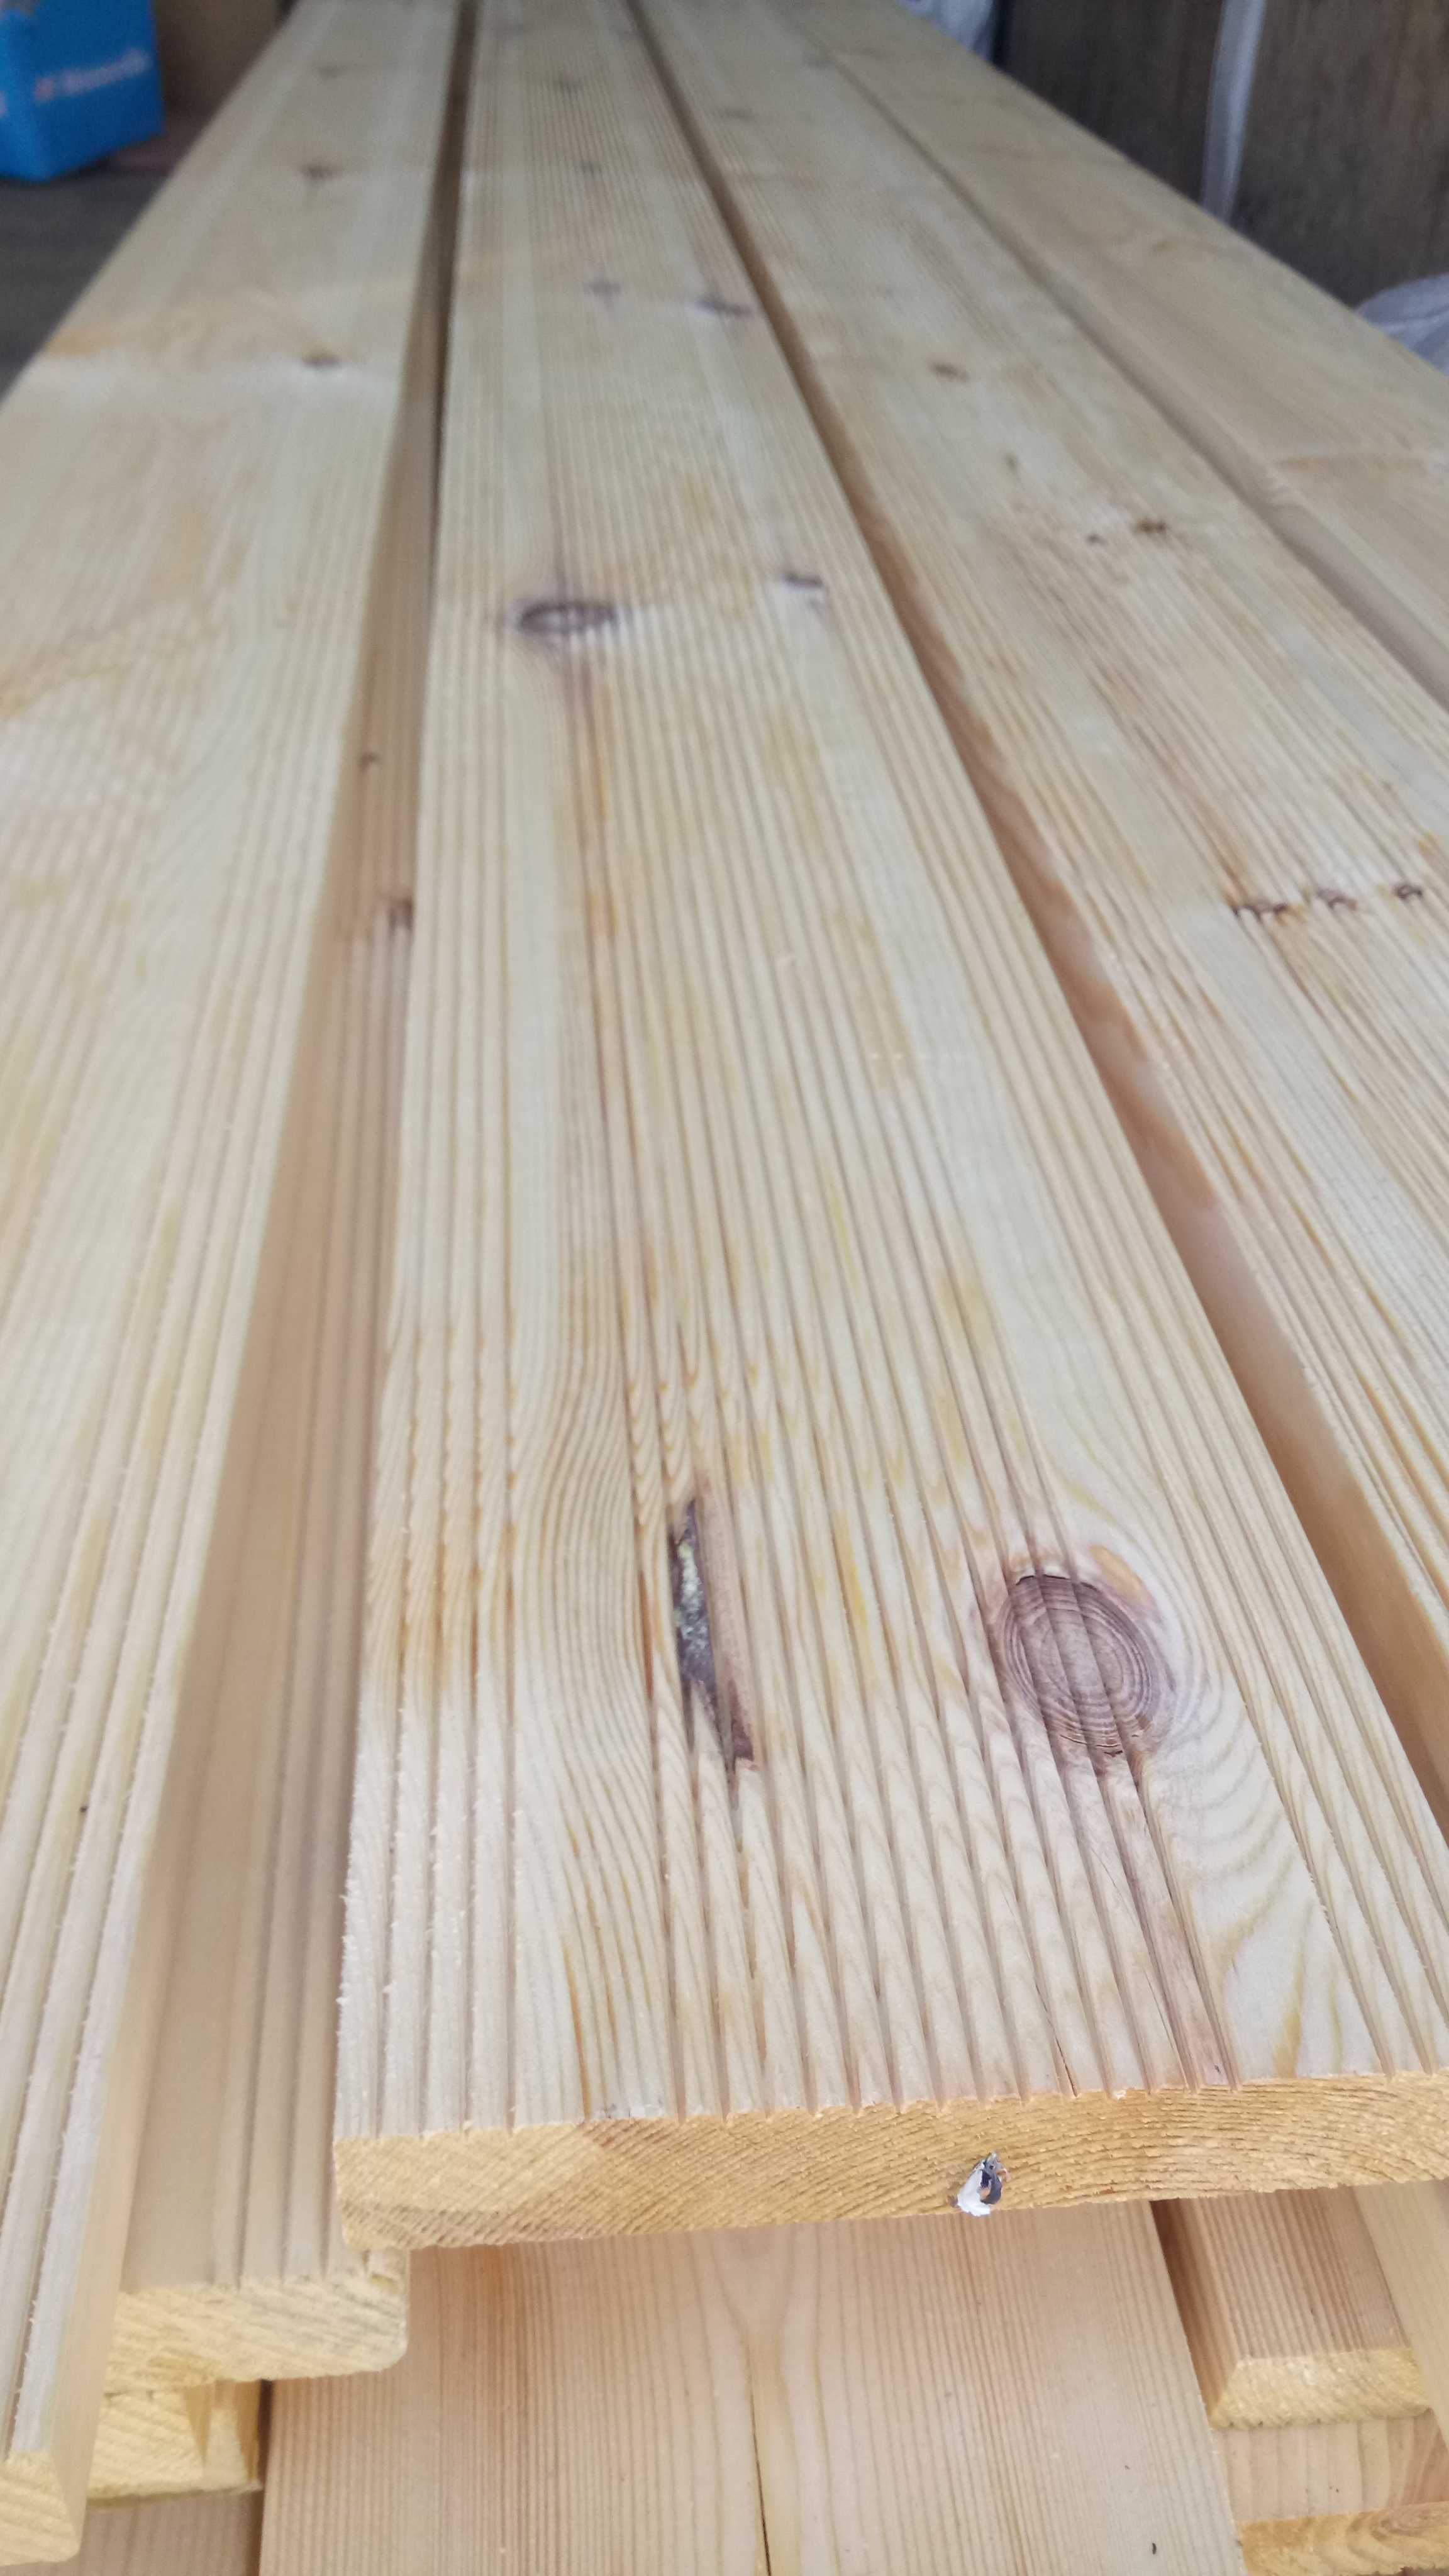 deska tarasowa deski drewno na taras strugana suszona heblowana